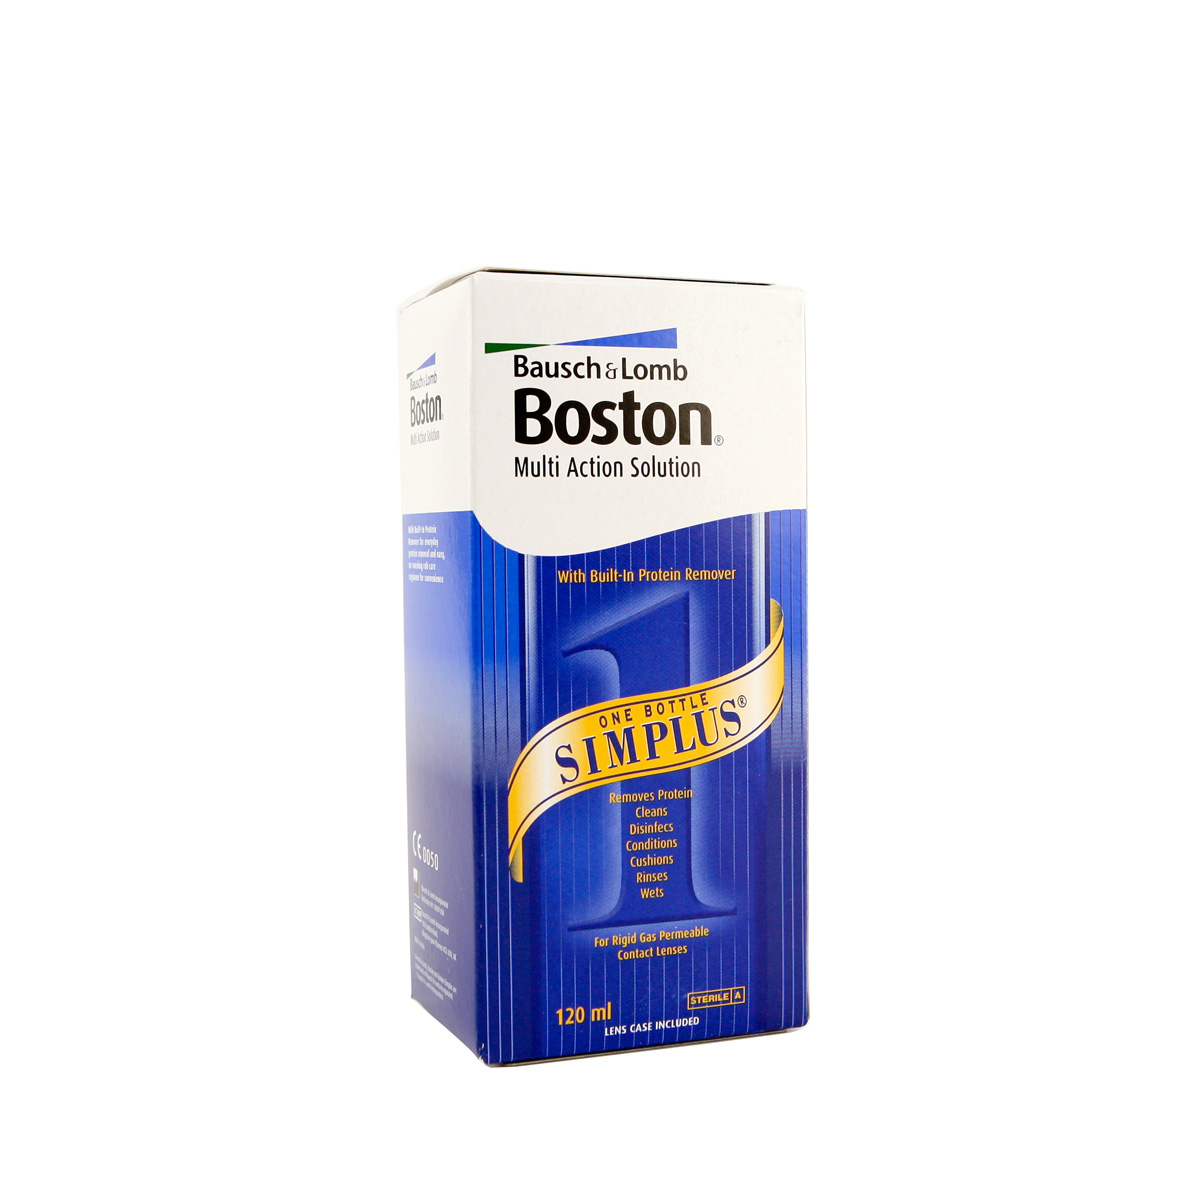 Boston Multi Action Solution Simplus (120ml)